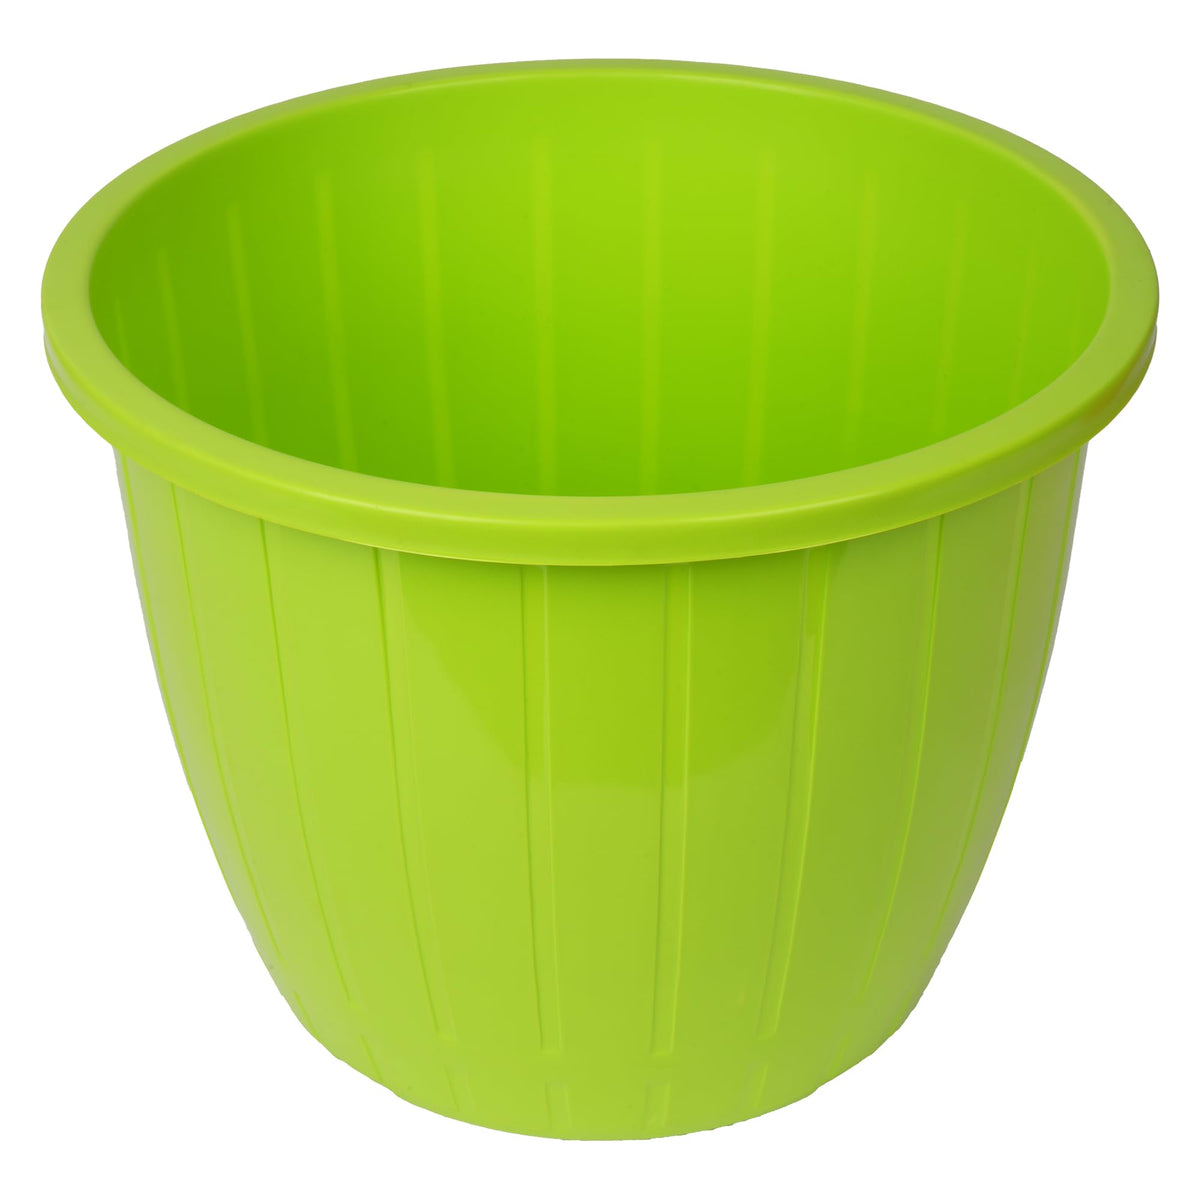 Heart Home Flower Pot | Flower Pots for Indoor & Outdoor | Plastic Pot for Gardening | Planter for Flower | Balcony Pots for Home Decor | Duro Flower Pot | 8 Inch | Green